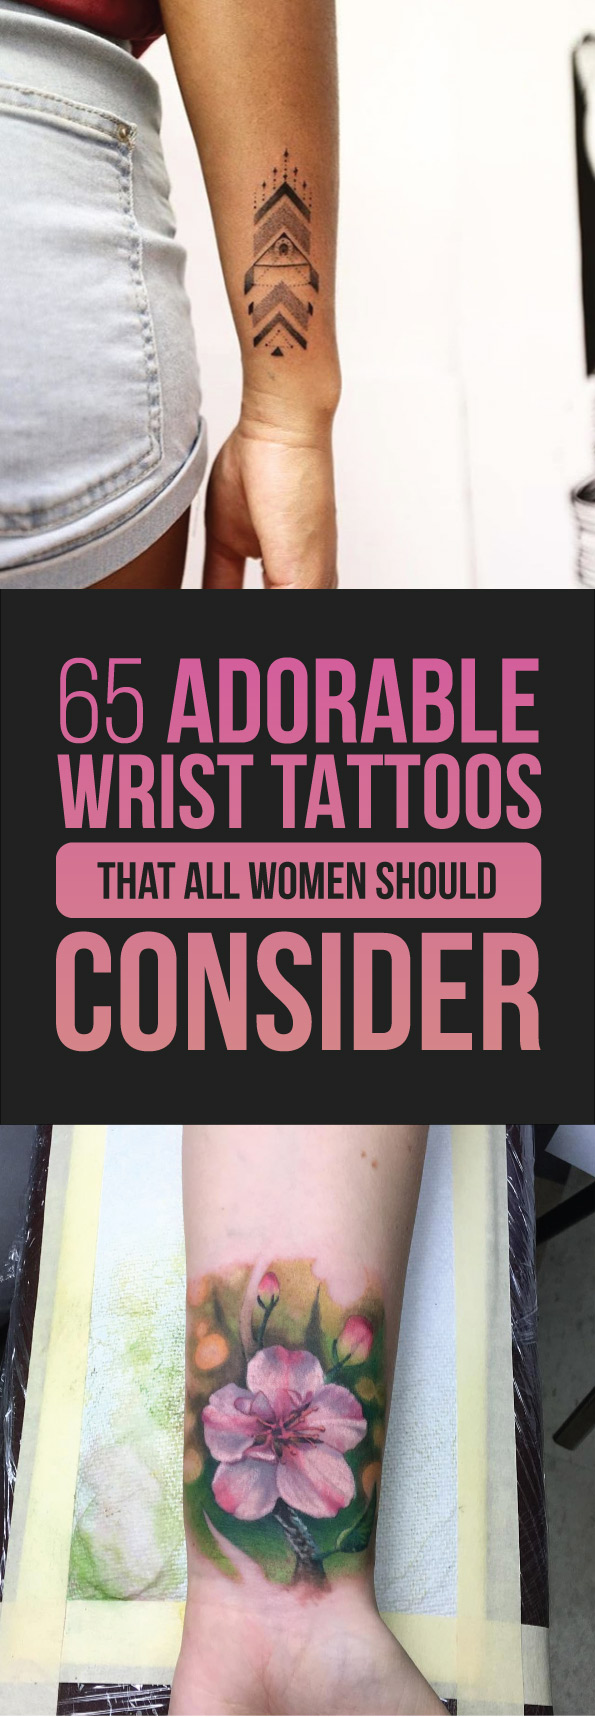 65 Adorable Wrist Tattoos All Women Should Consider | TattooBlend